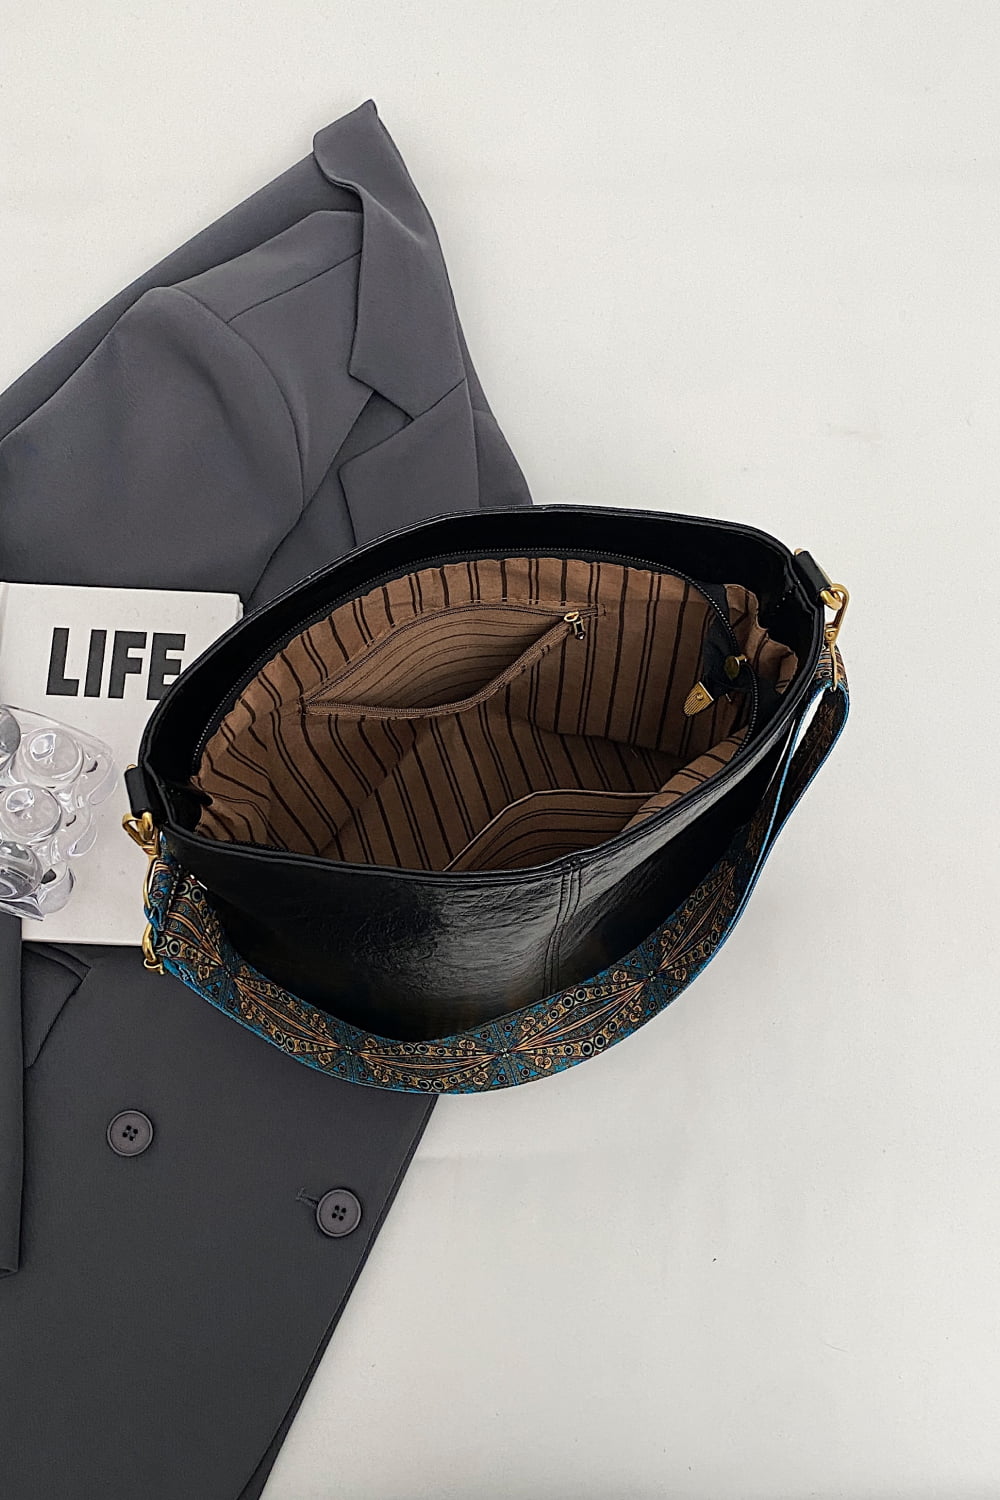 Adored PU Leather Shoulder Bag | On sale | High Quality PU